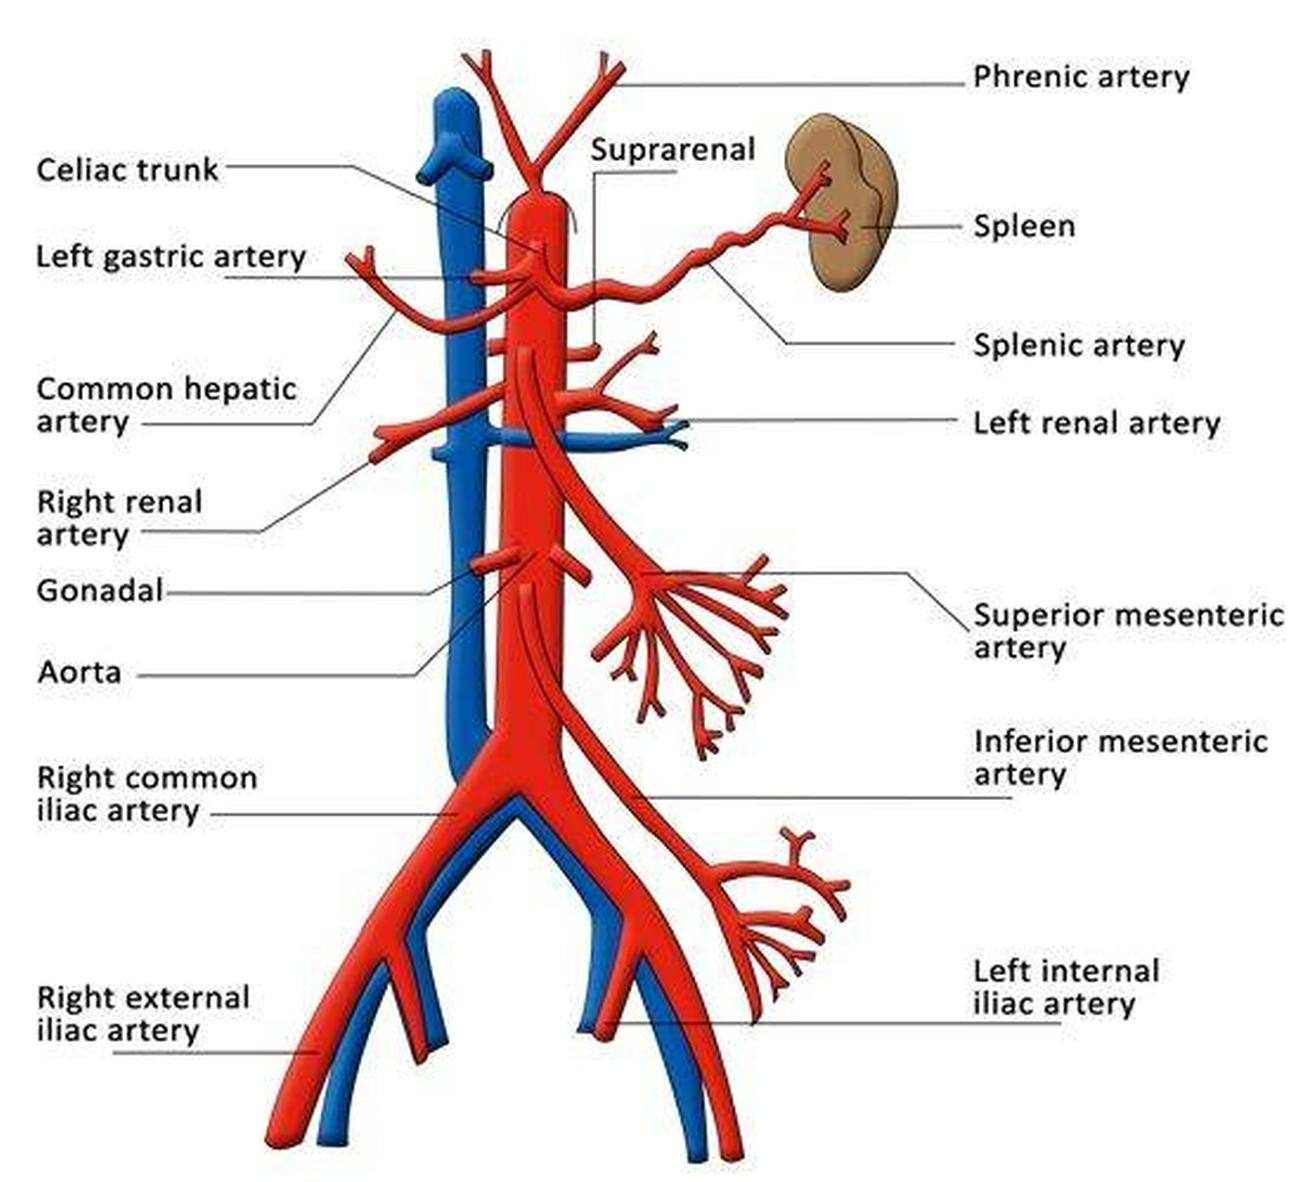 Pictures Of Celiac Artery